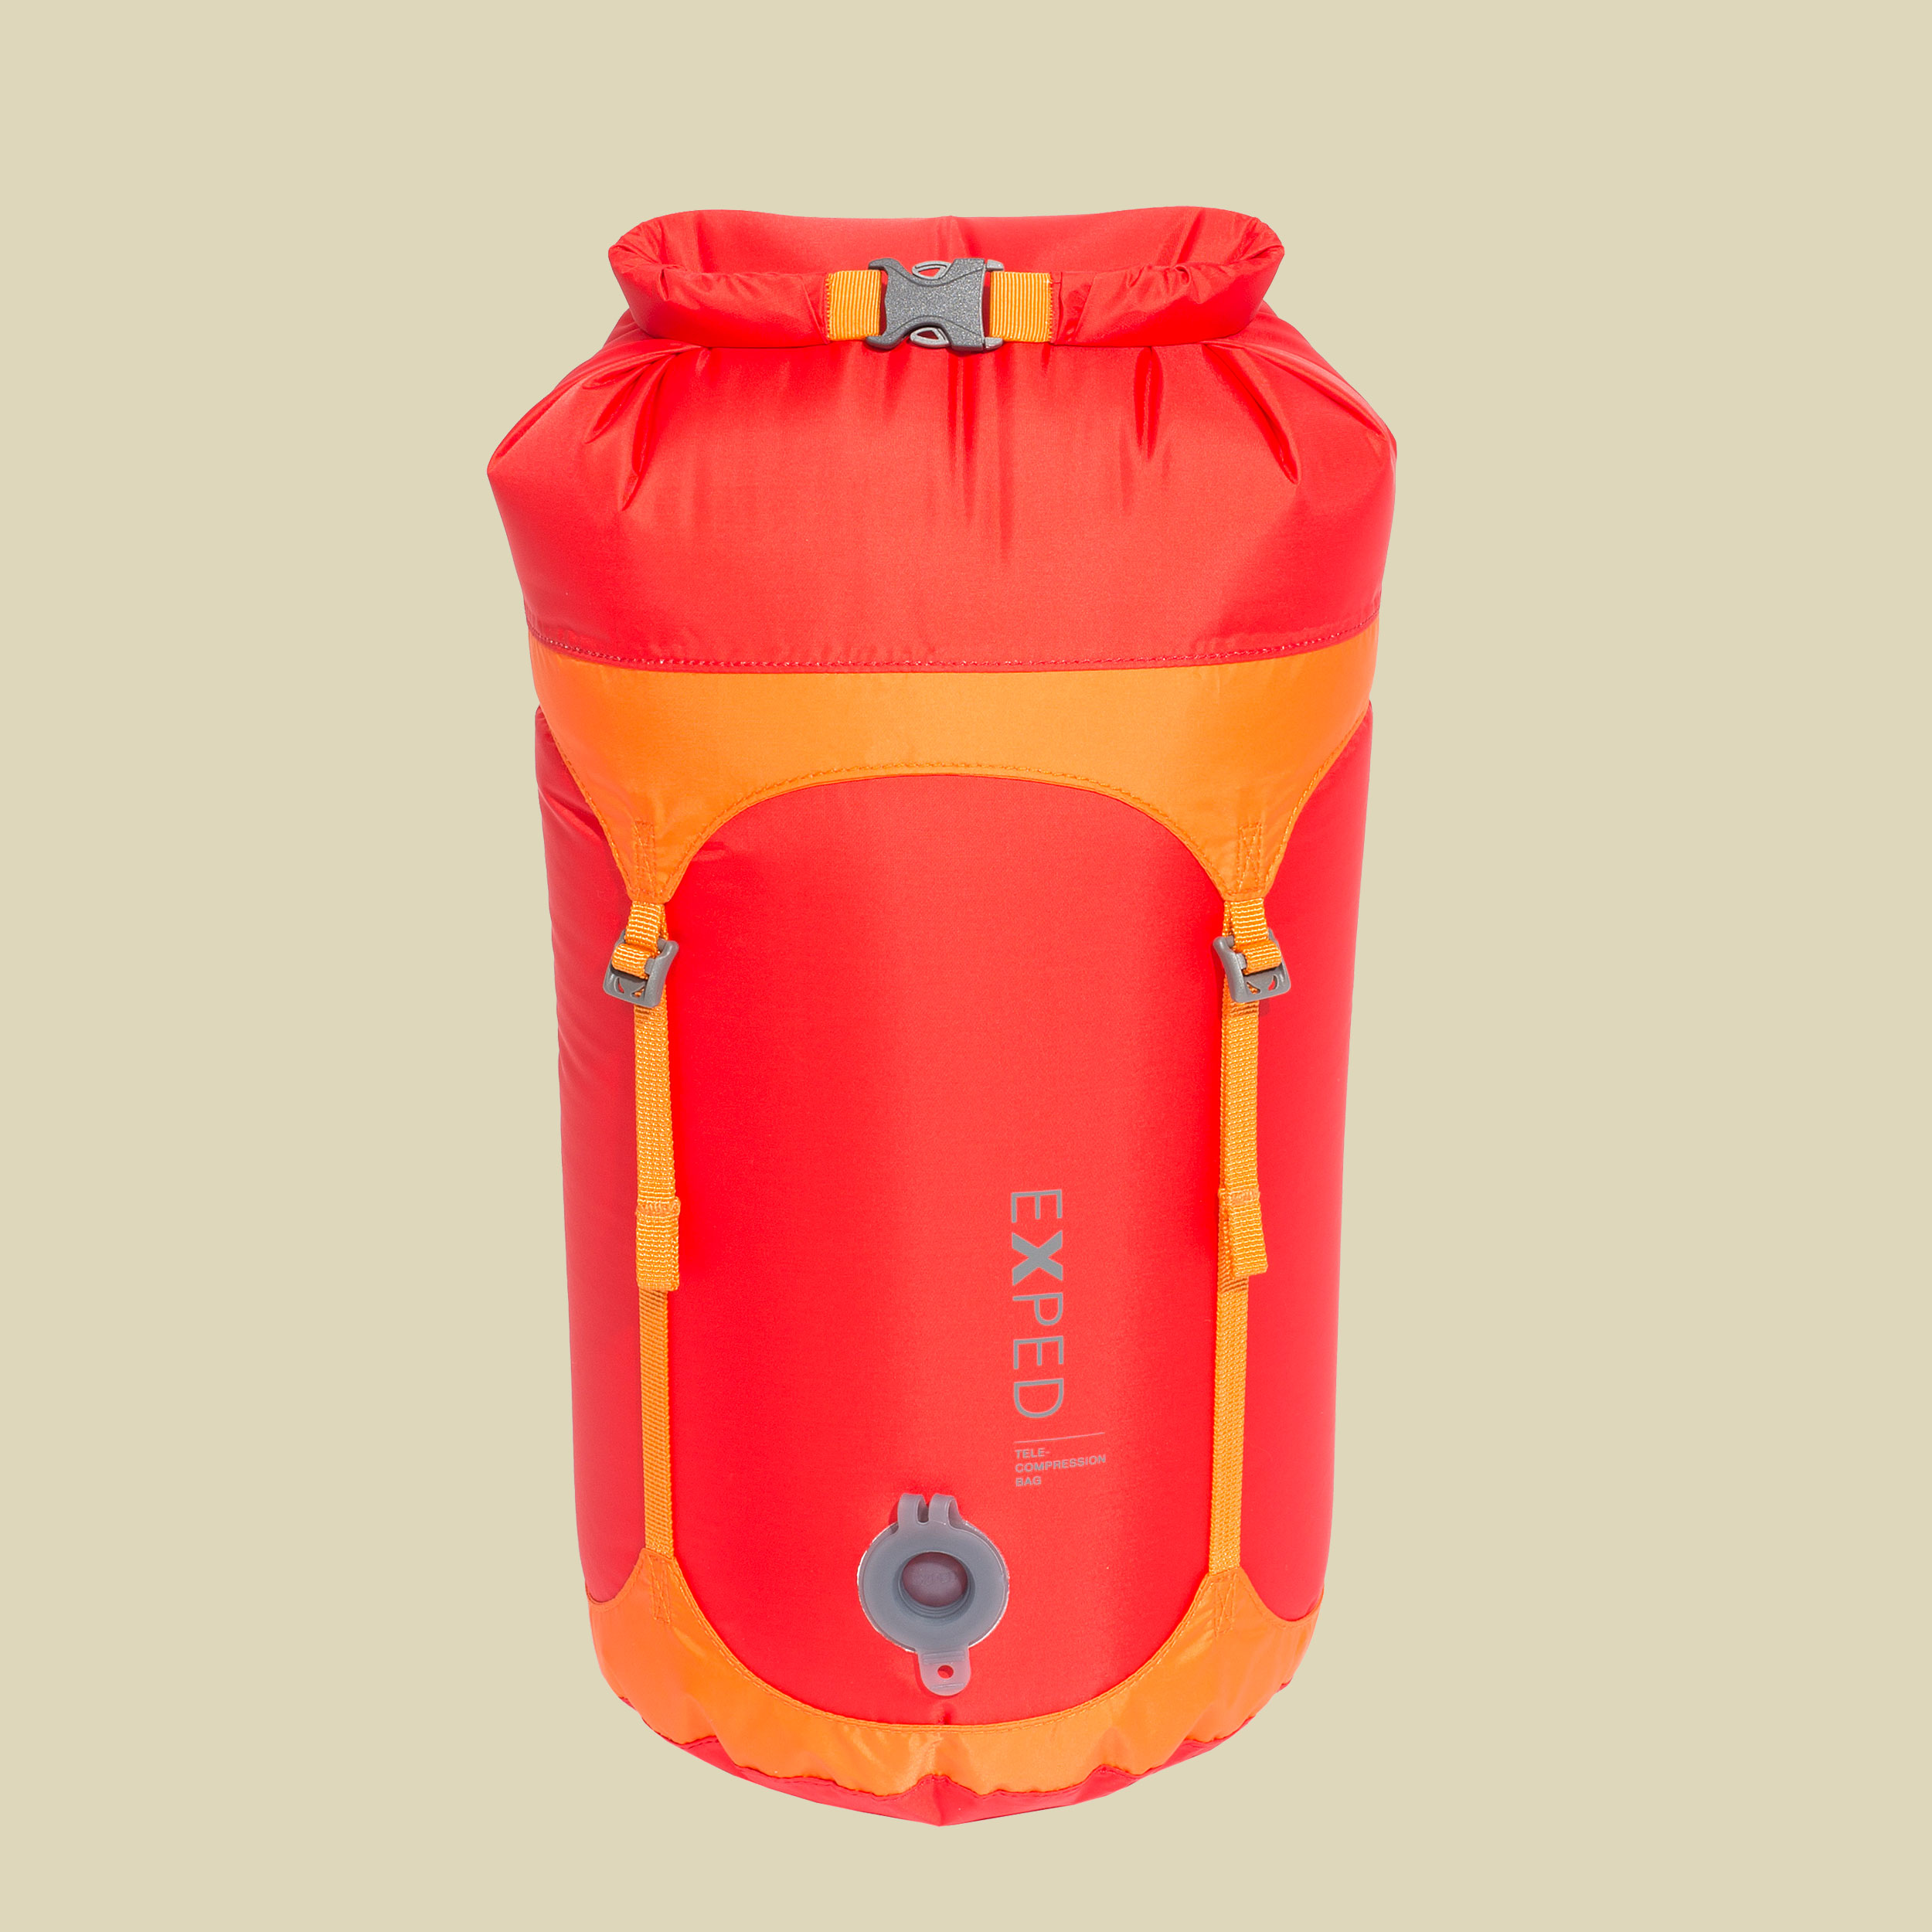 Waterproof Telecompression Bag Größe S Farbe red